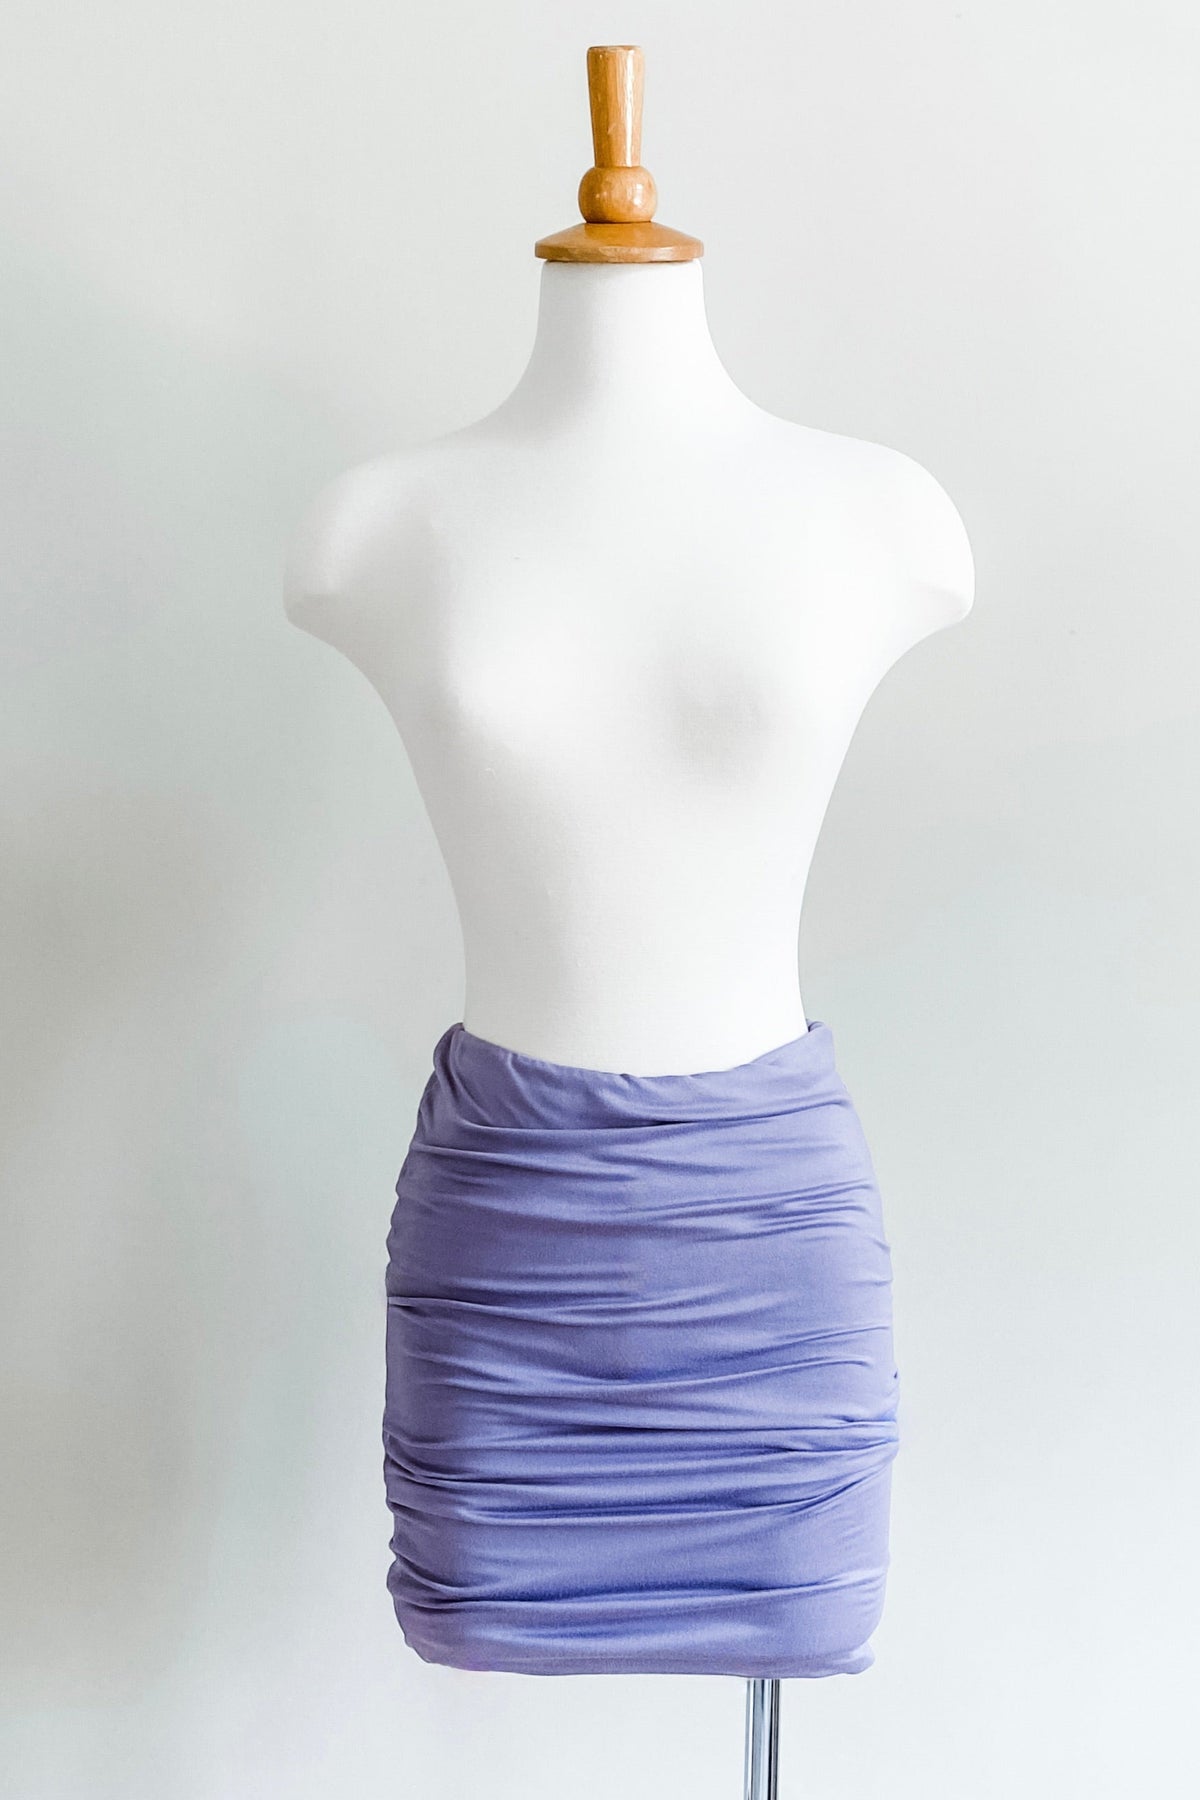 Diane Kroe Skort (Purple) - Warm Weather Capsule Collection